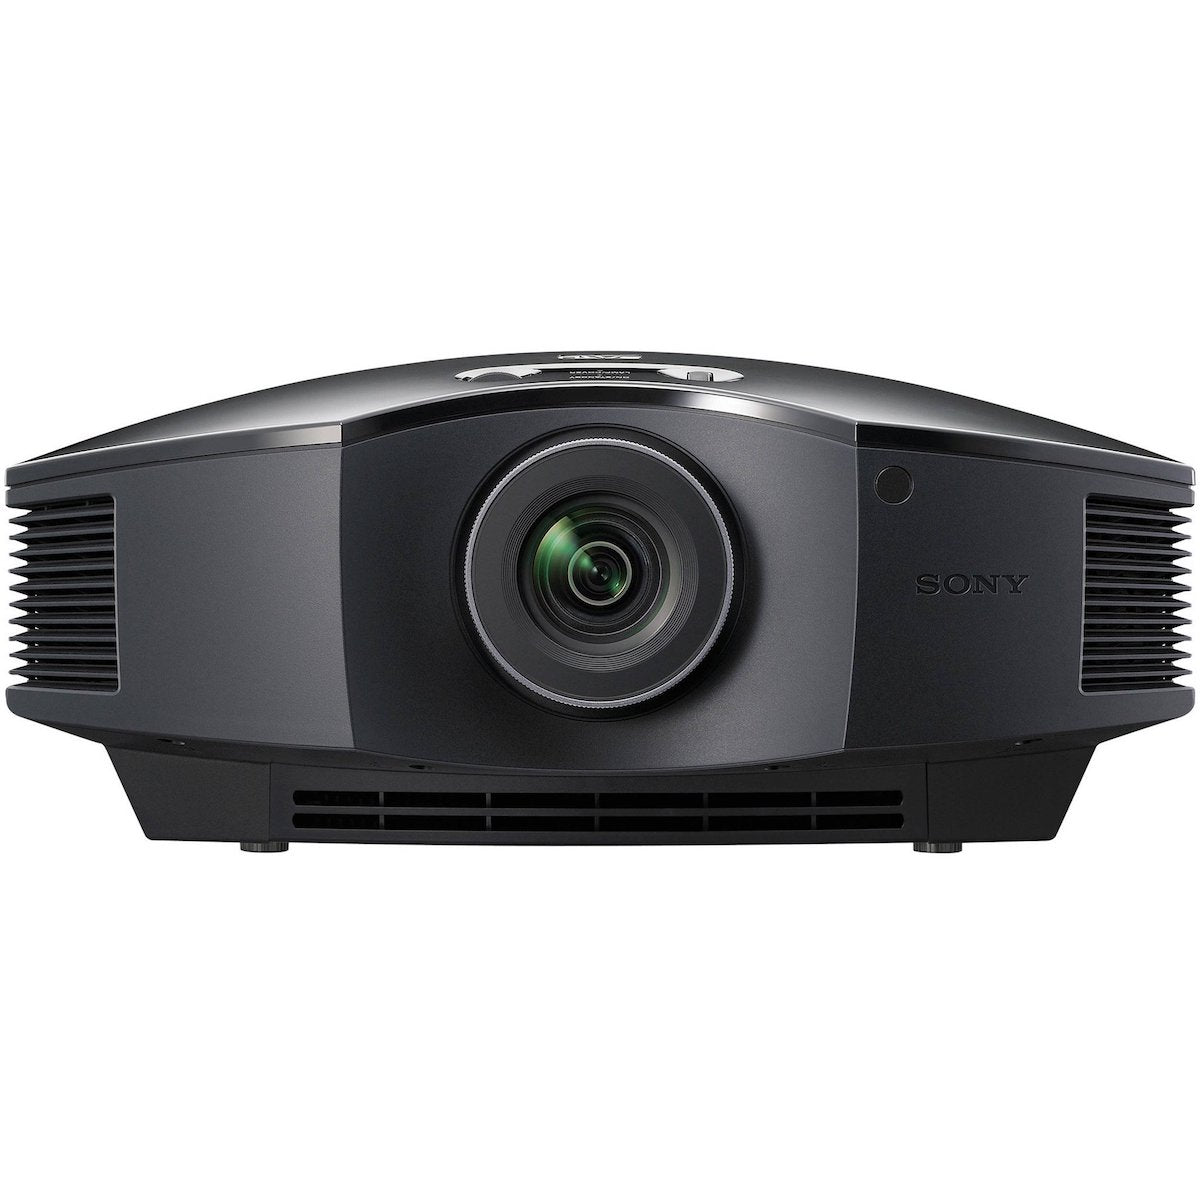 Sony VPL-HW65ES - Full HD Home Theatre Projector - AVStore